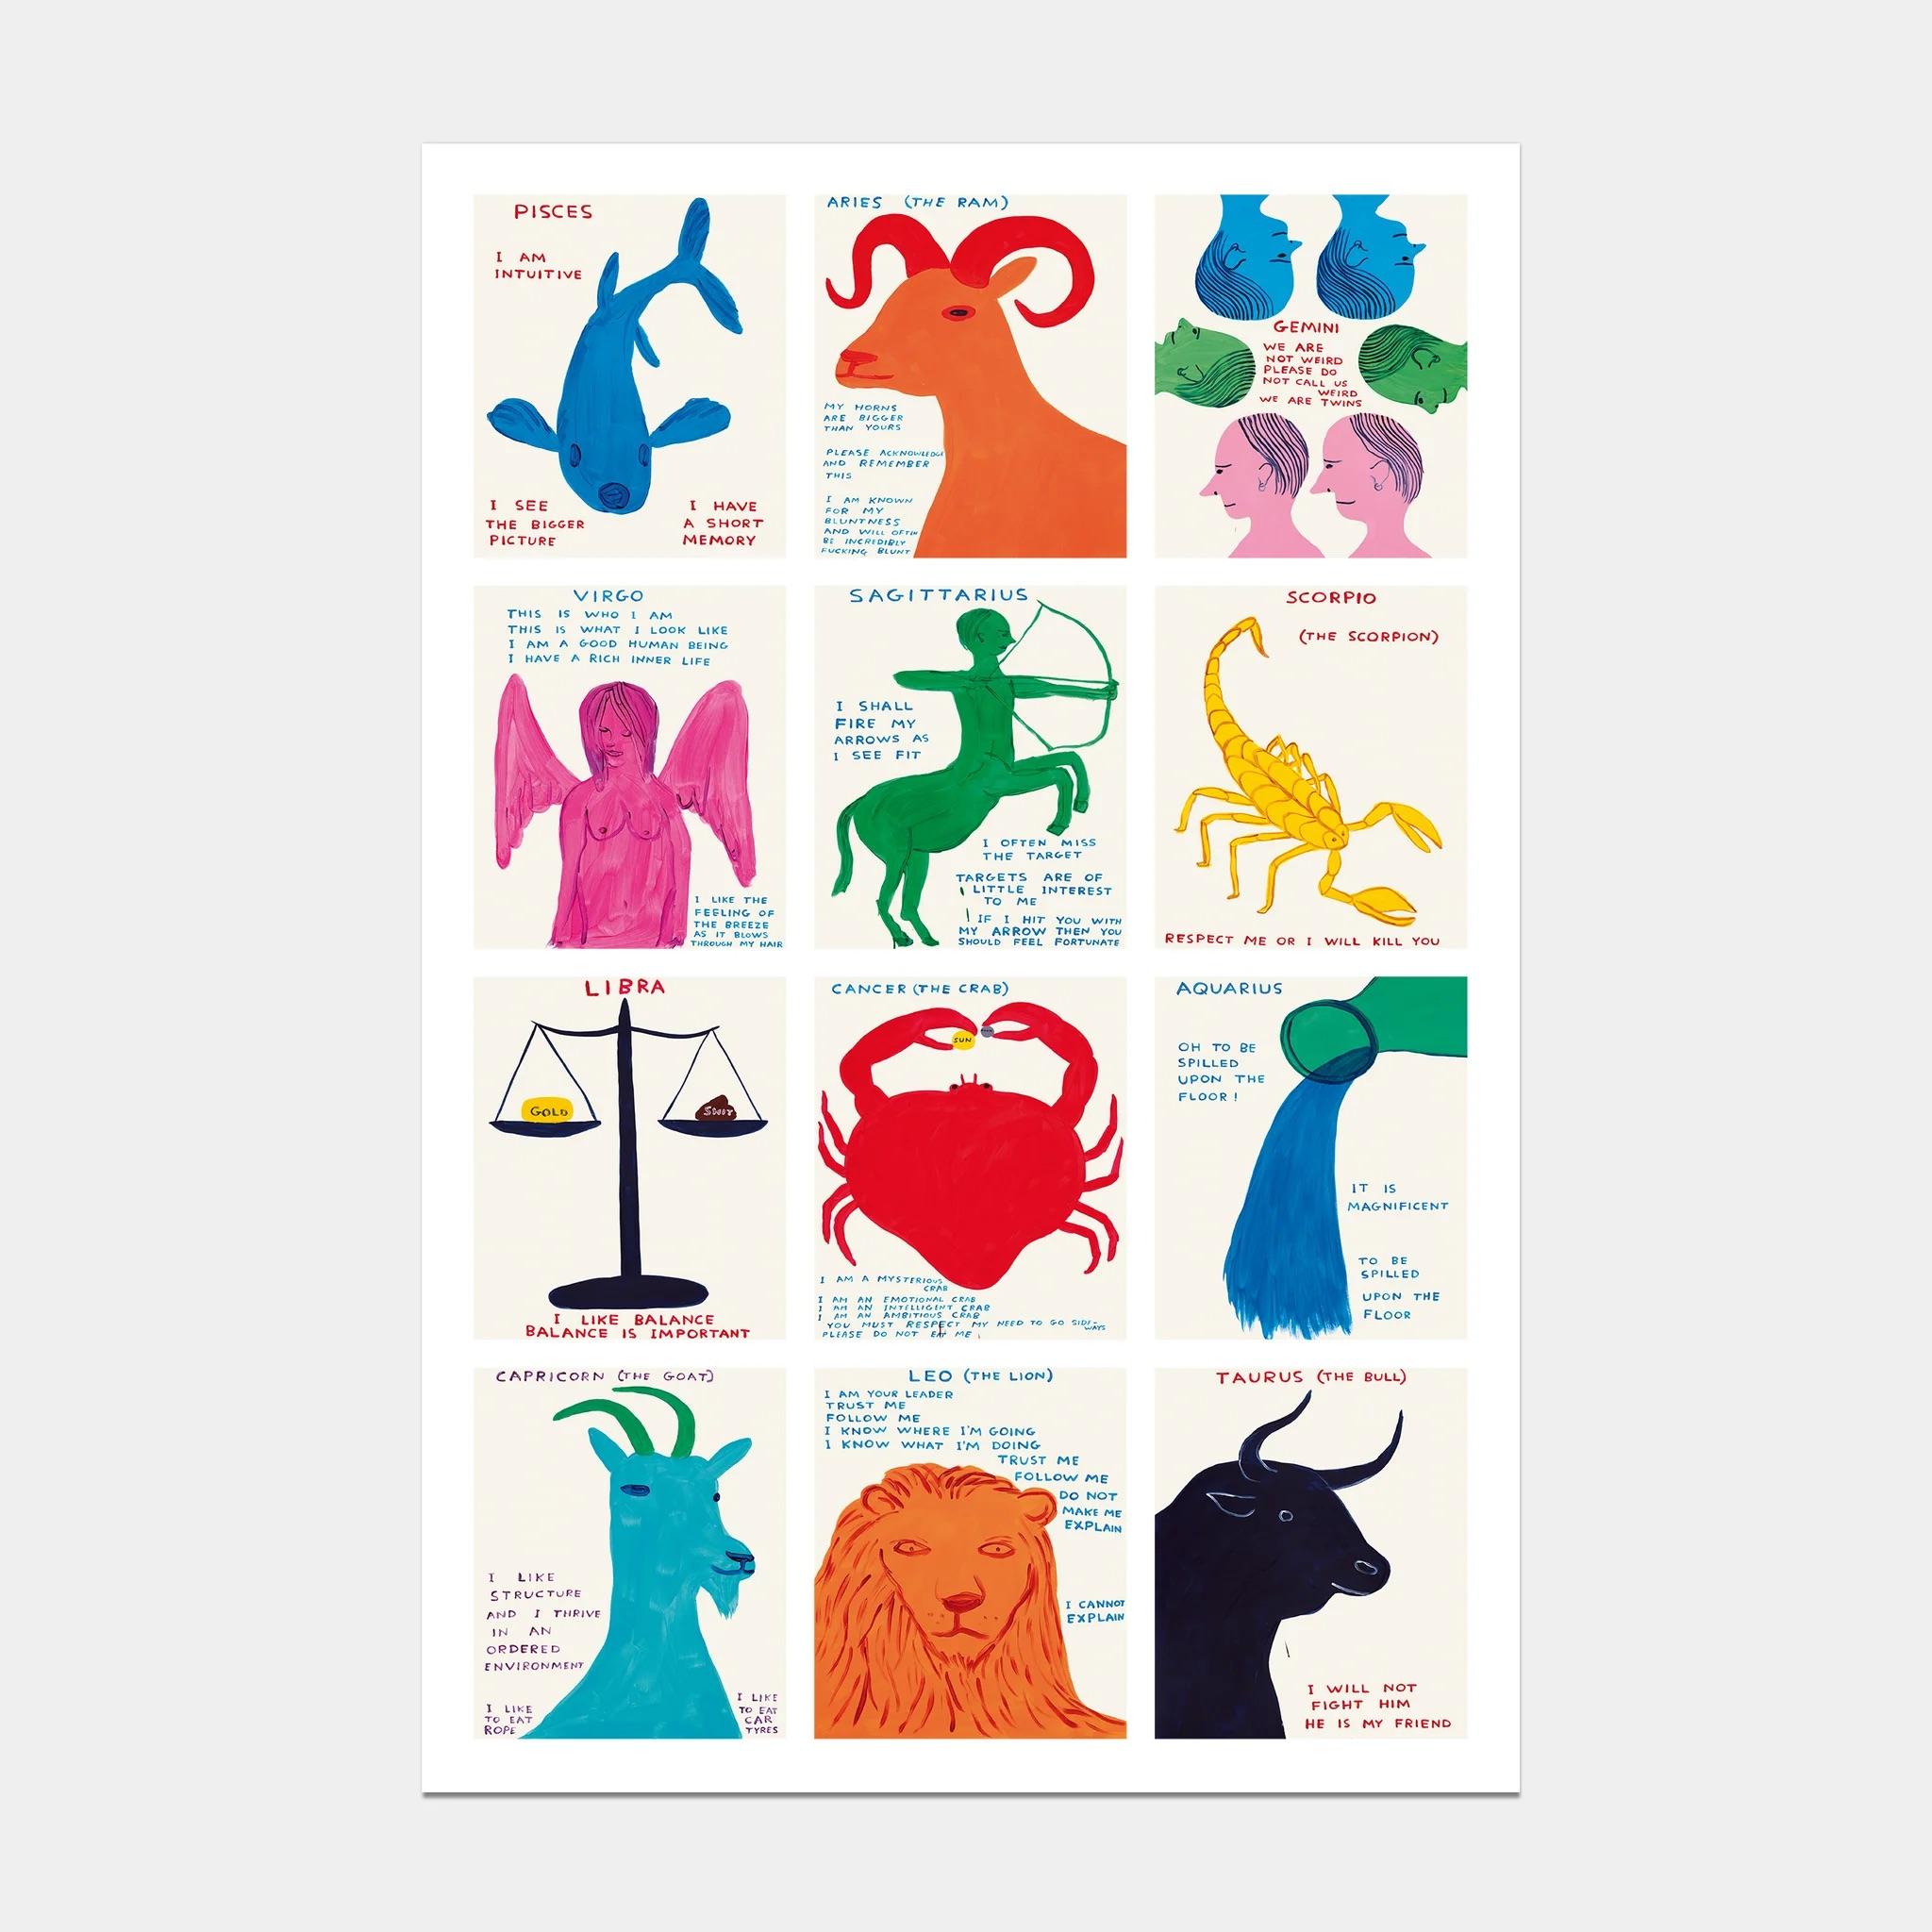 David Shrigley
Signes du Zodiac
61 x 91,5 cm
Lithographie offset
Imprimé sur 200g Arctic Volume
Narayana Press au Danemark